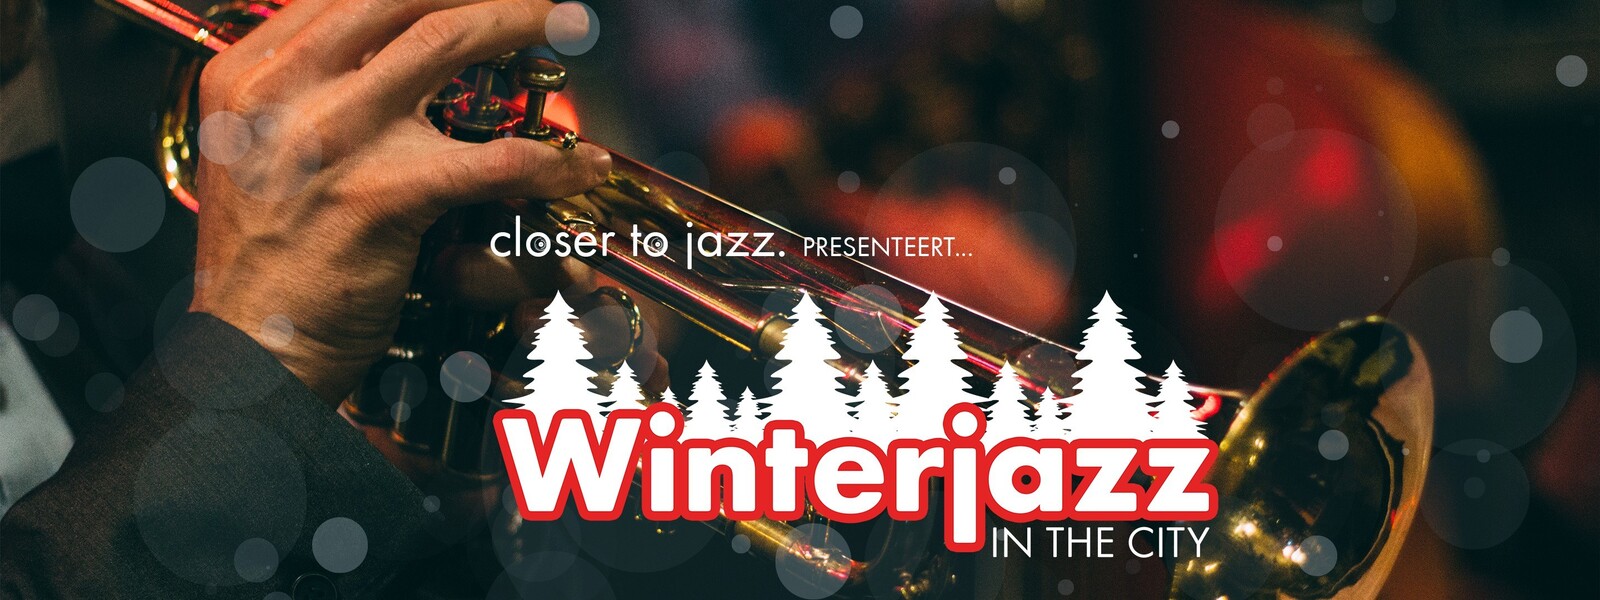 Closer to Jazz Winterjazz in the city